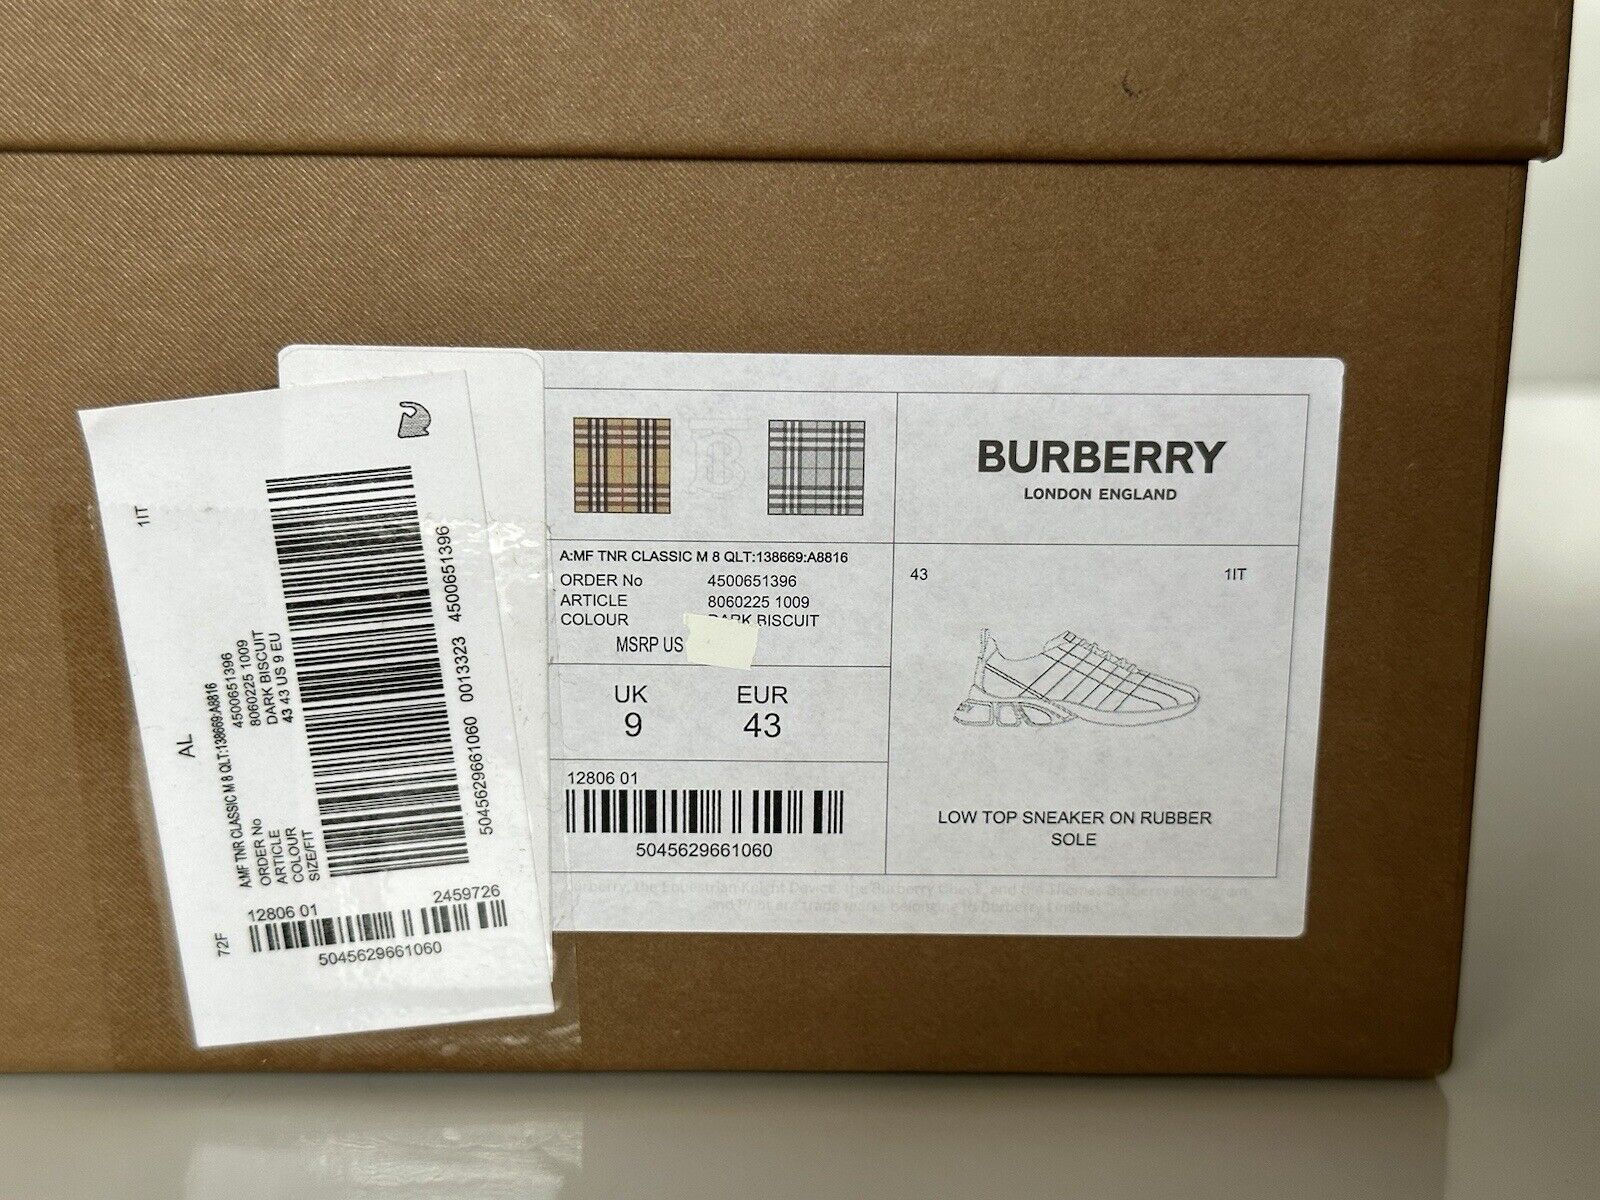 NIB $850 Burberry Quilted Dark Biscuit Leder-Sneaker 10 US (43 Eu) 8060225 IT 